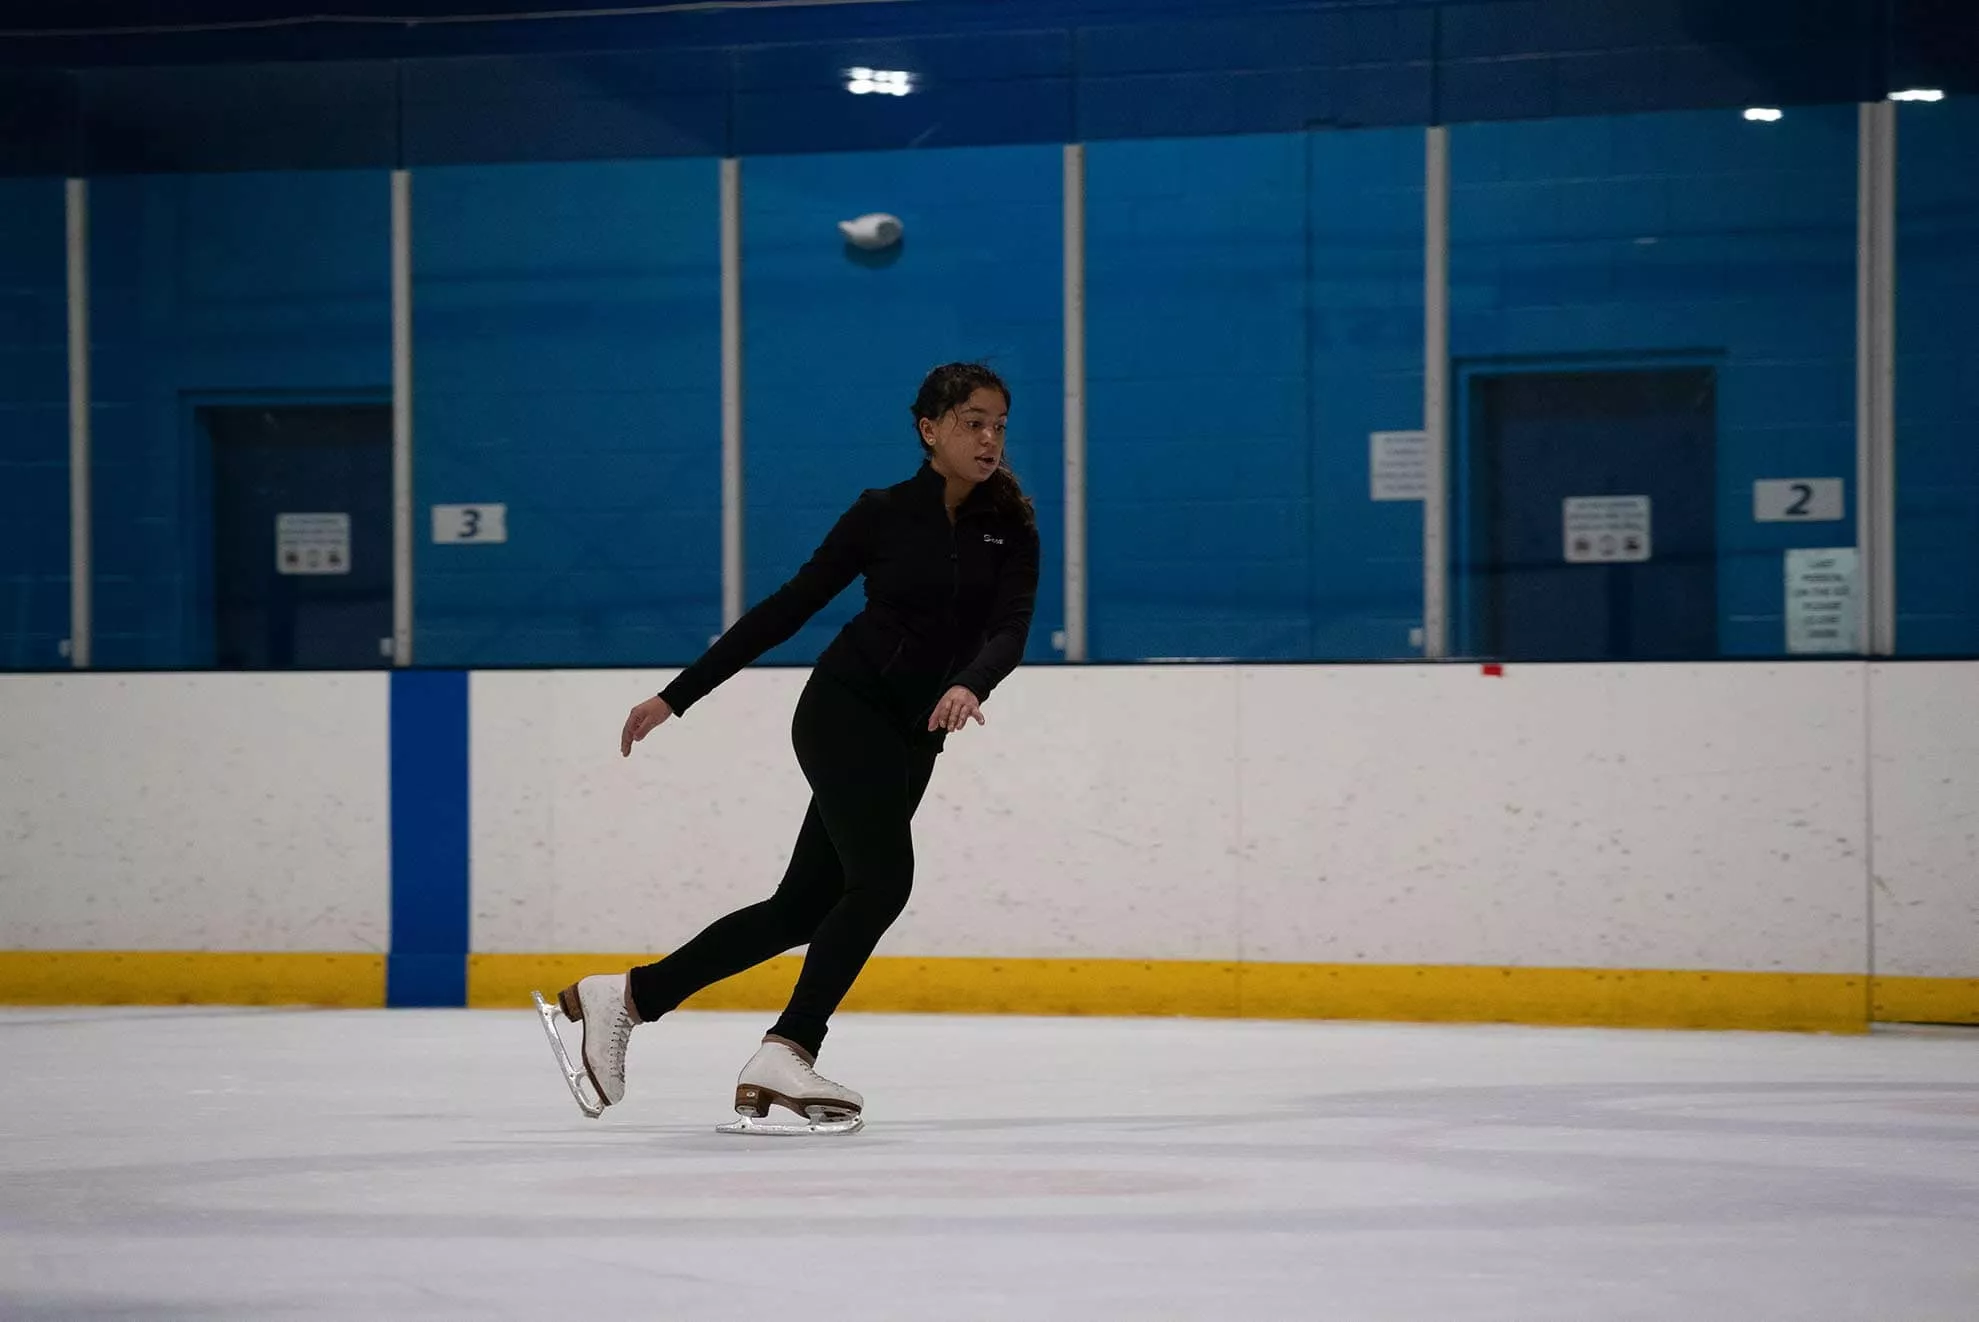 Cork Figure Skating Association in Ireland, Europe | Skating,Roller Skating & Inline Skating - Rated 0.9